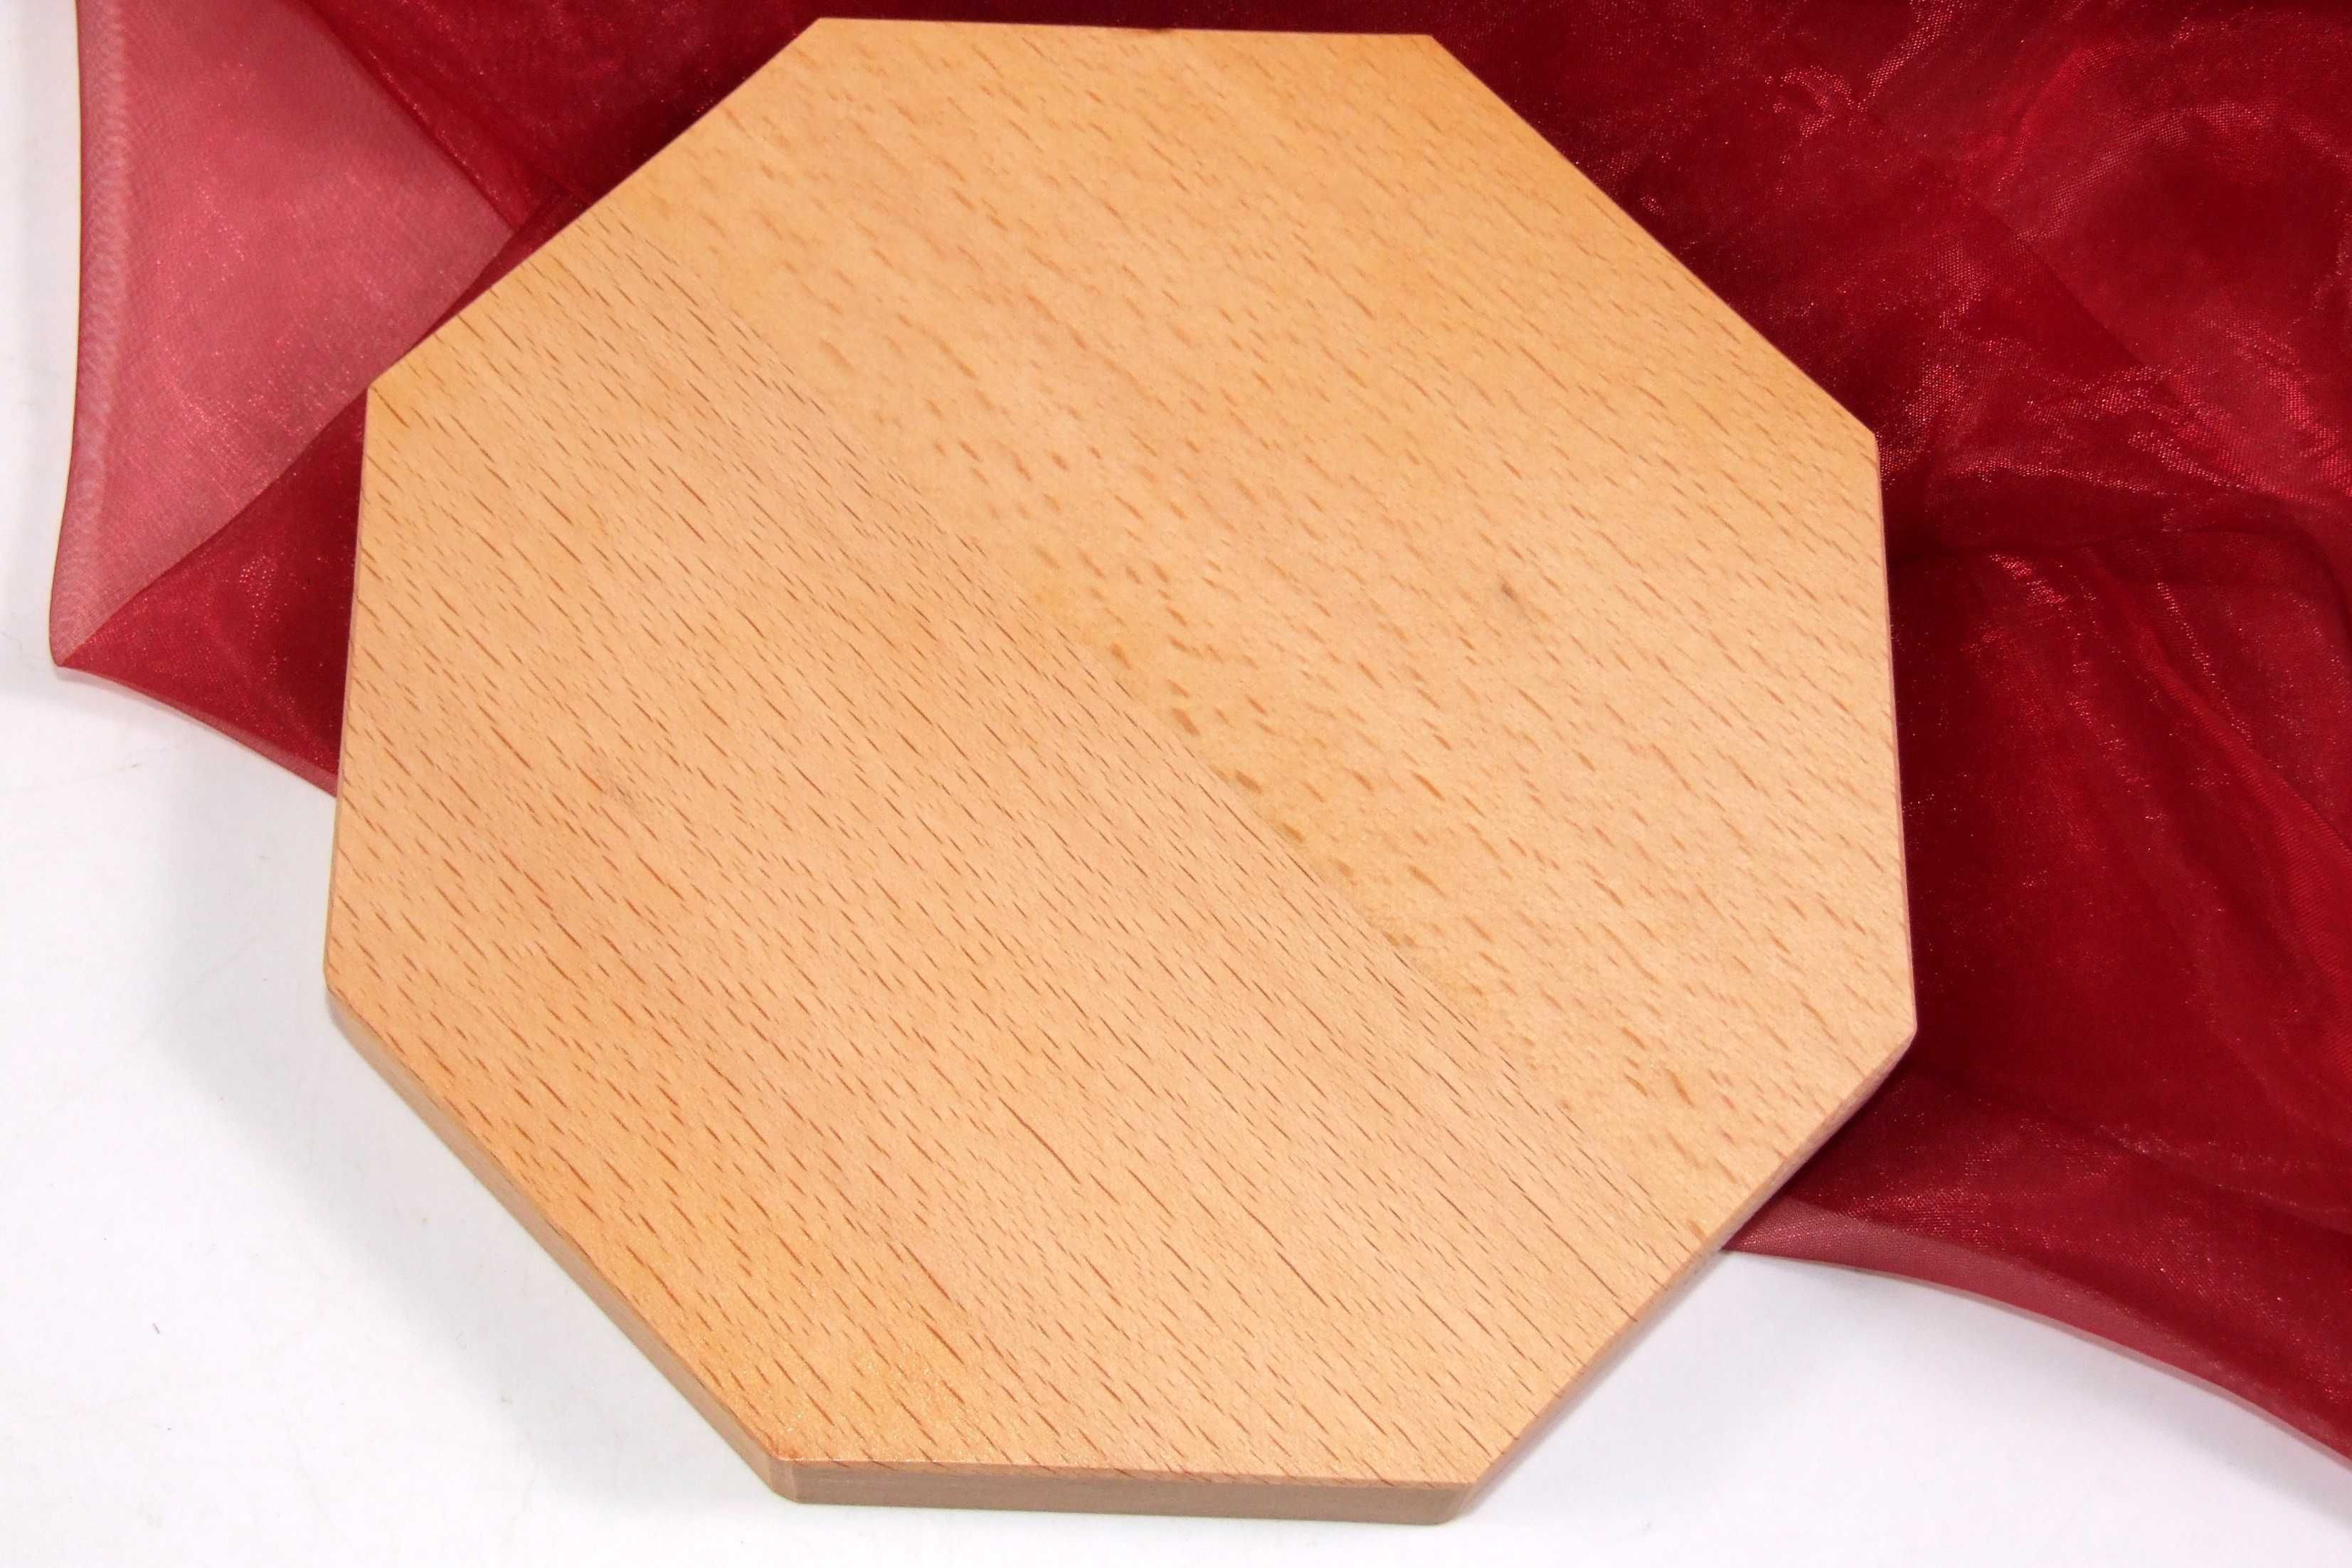 Ruleta Giroscopica - Titirez, joc din lemn, Made in Germany, NOU